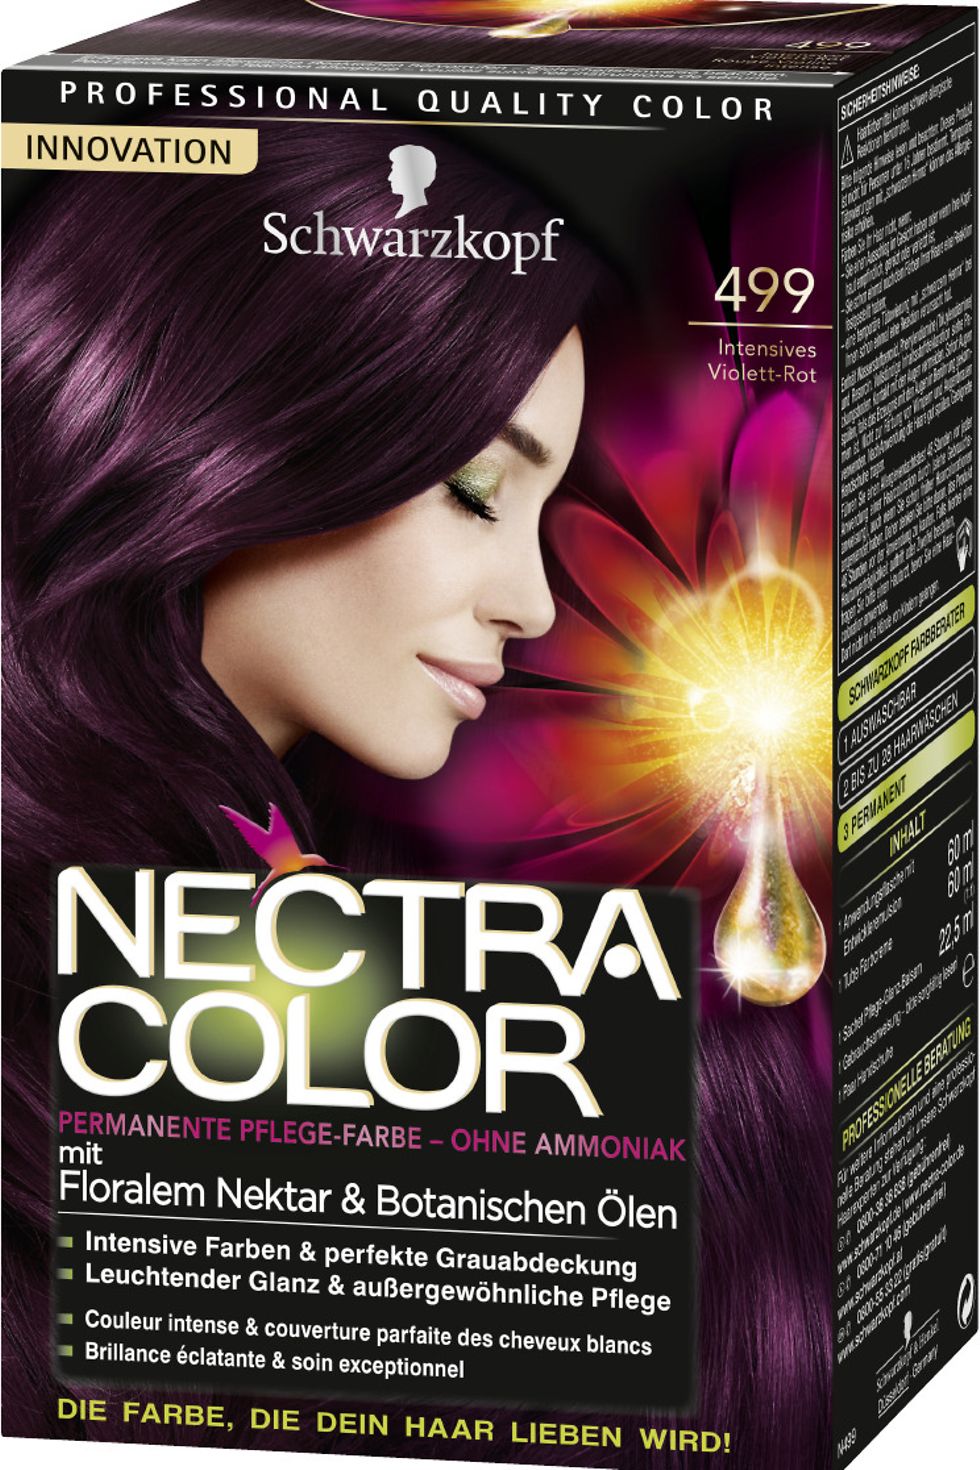 Schwarzkopf Nectra Color 499 Intensives Violett-Rot